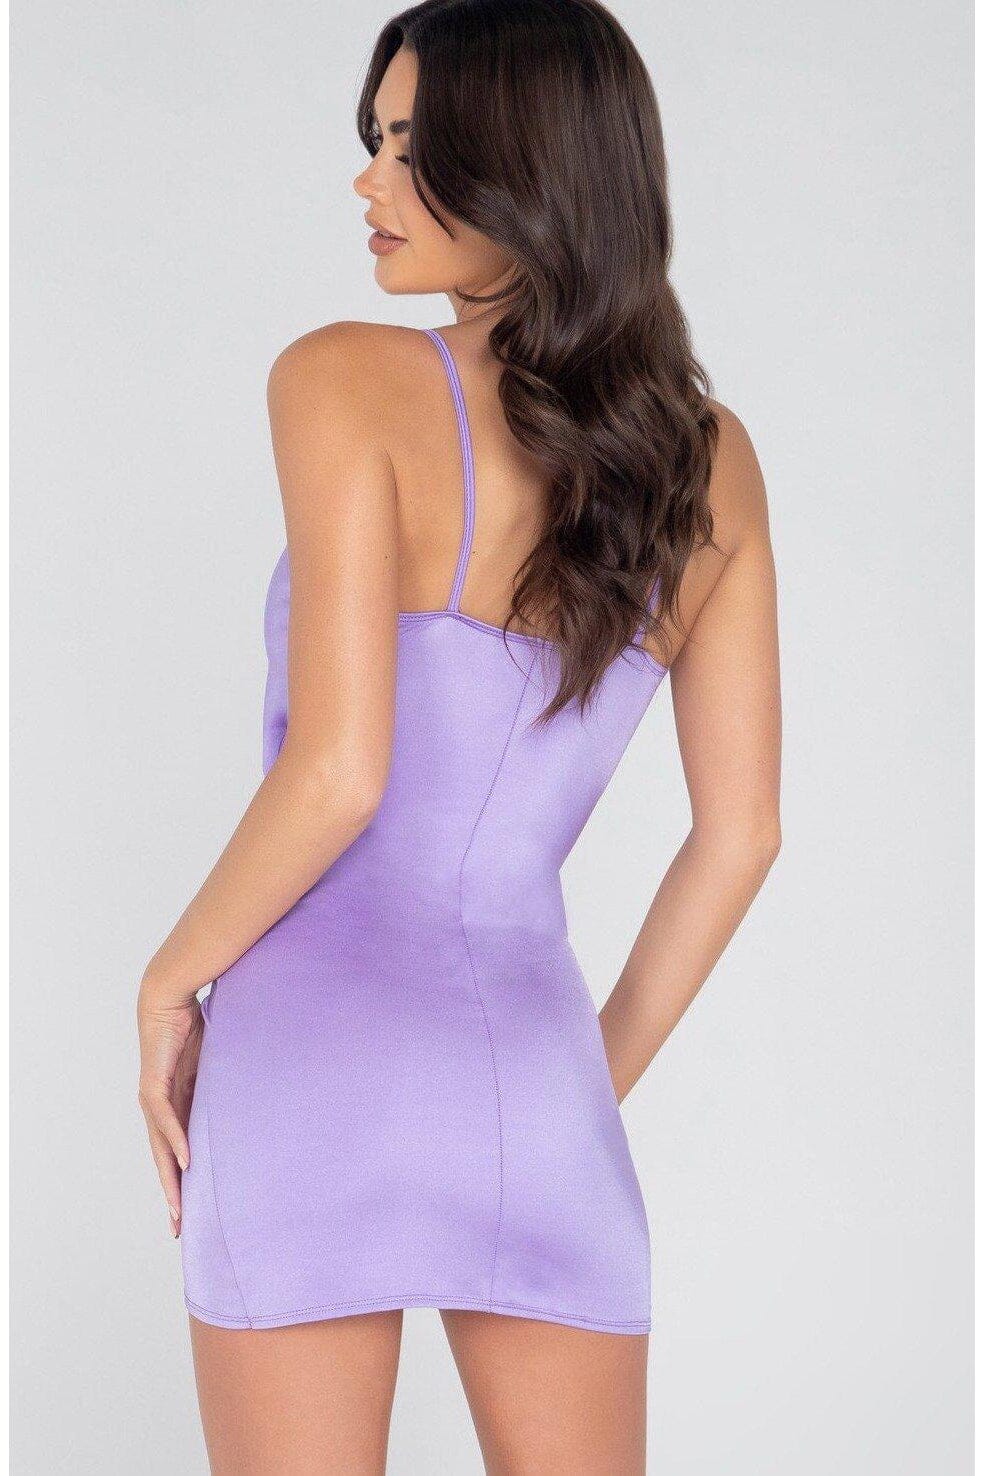 SS-Spaghetti Strap Overlap Mini Scrunch Dress-Clothing-Roma Brand-Purple-S-SEXYSHOES.COM